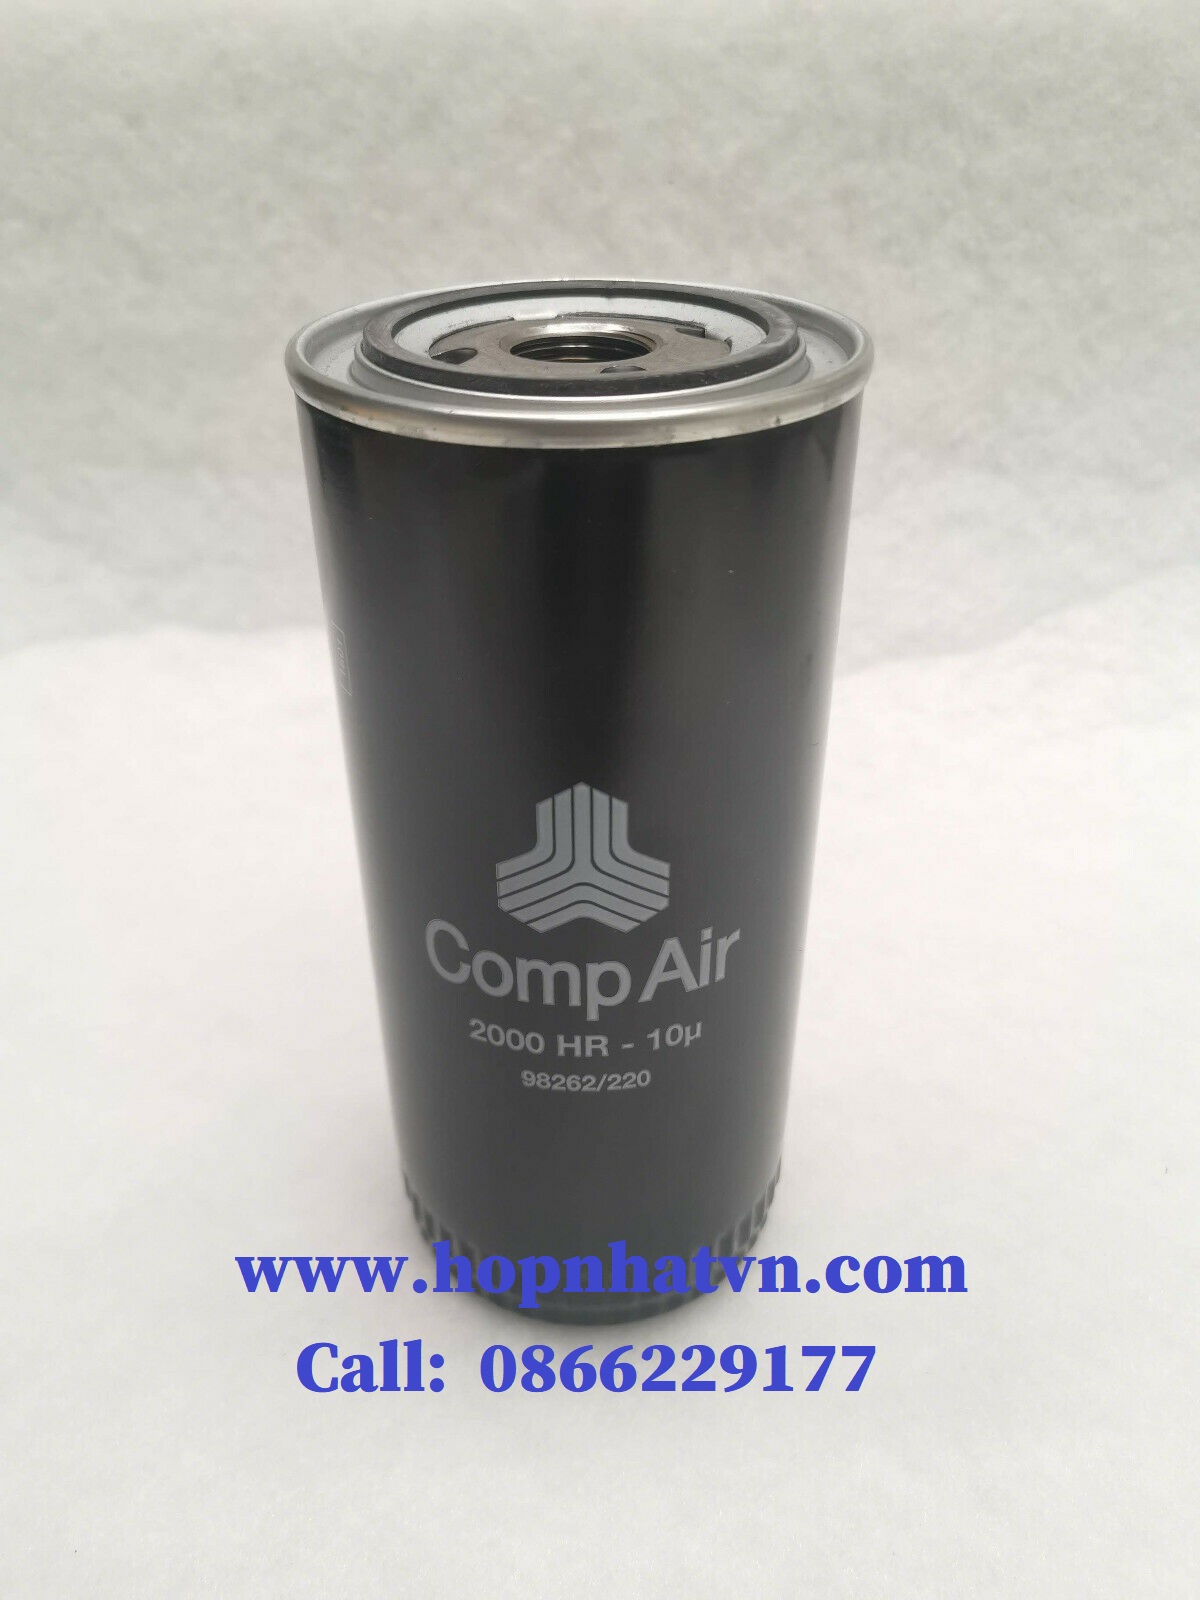 Oil Filter / Lọc dầu  C11158-1775, C 11158-1775, SH 8107